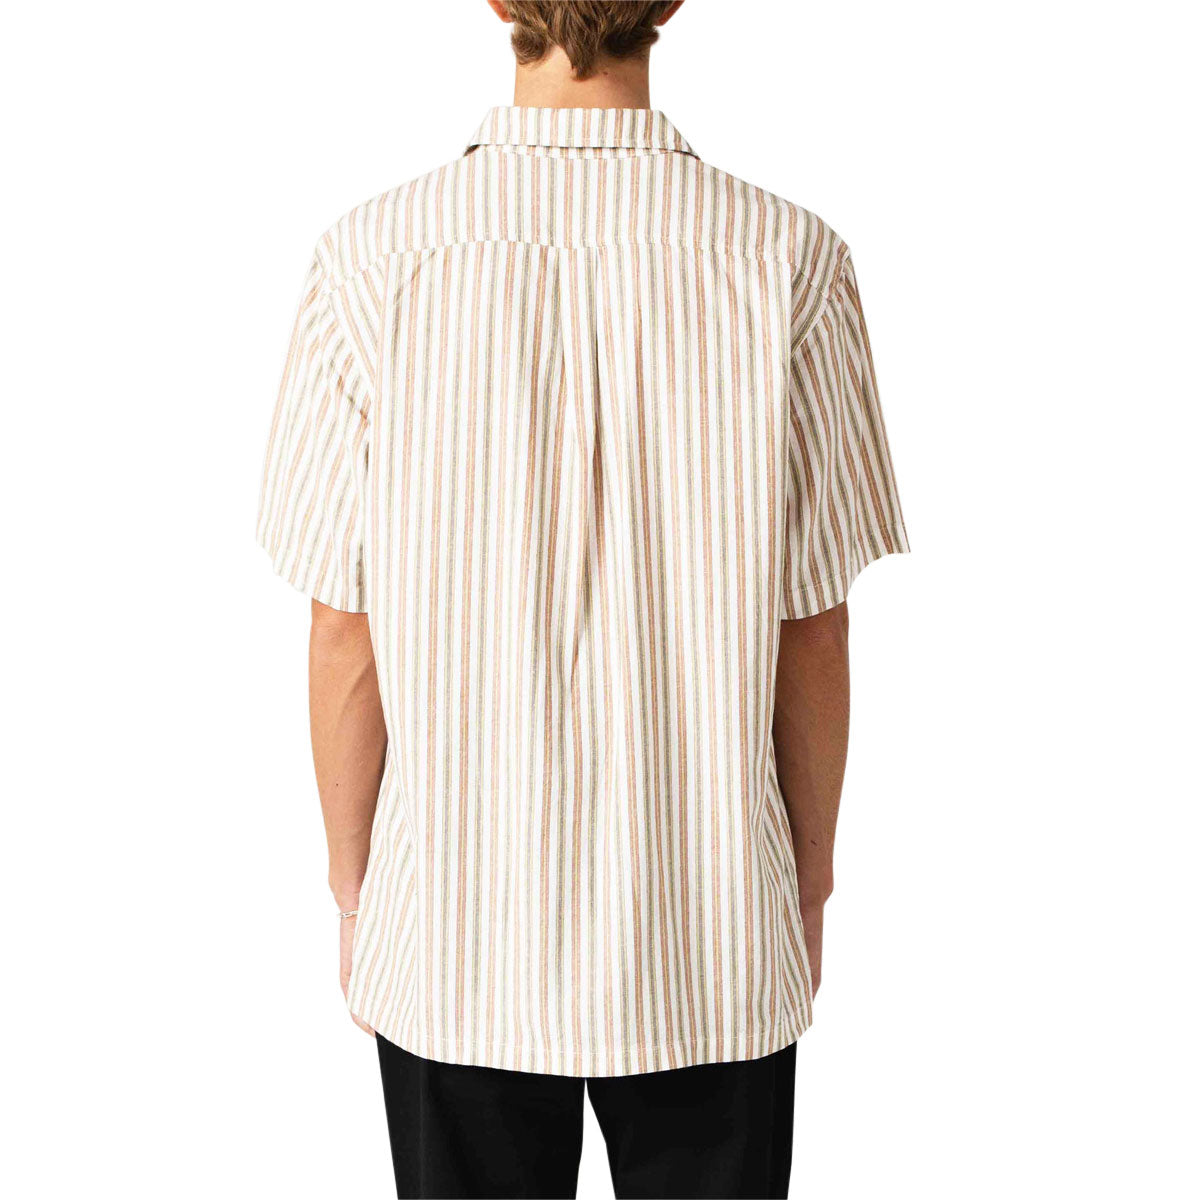 Former Reynolds Striped Shirt - Ochre image 2